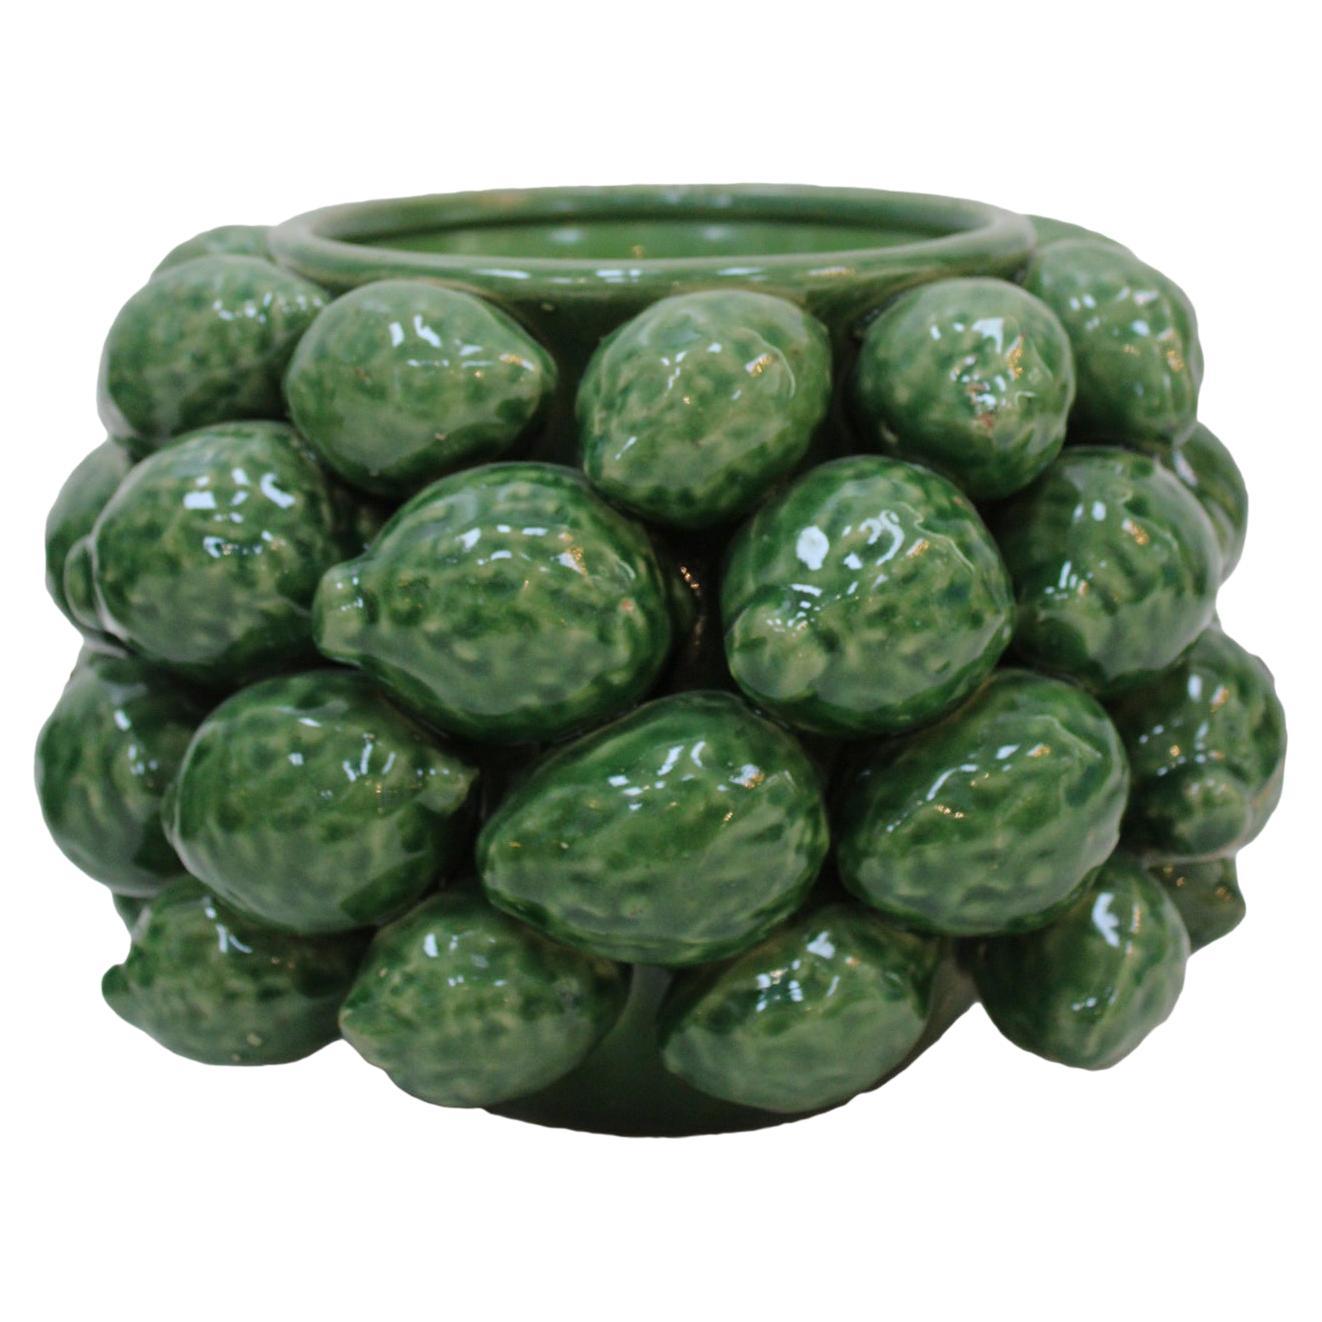 Contemporary Italian Green Ceramic Vase with Fruit Motifs